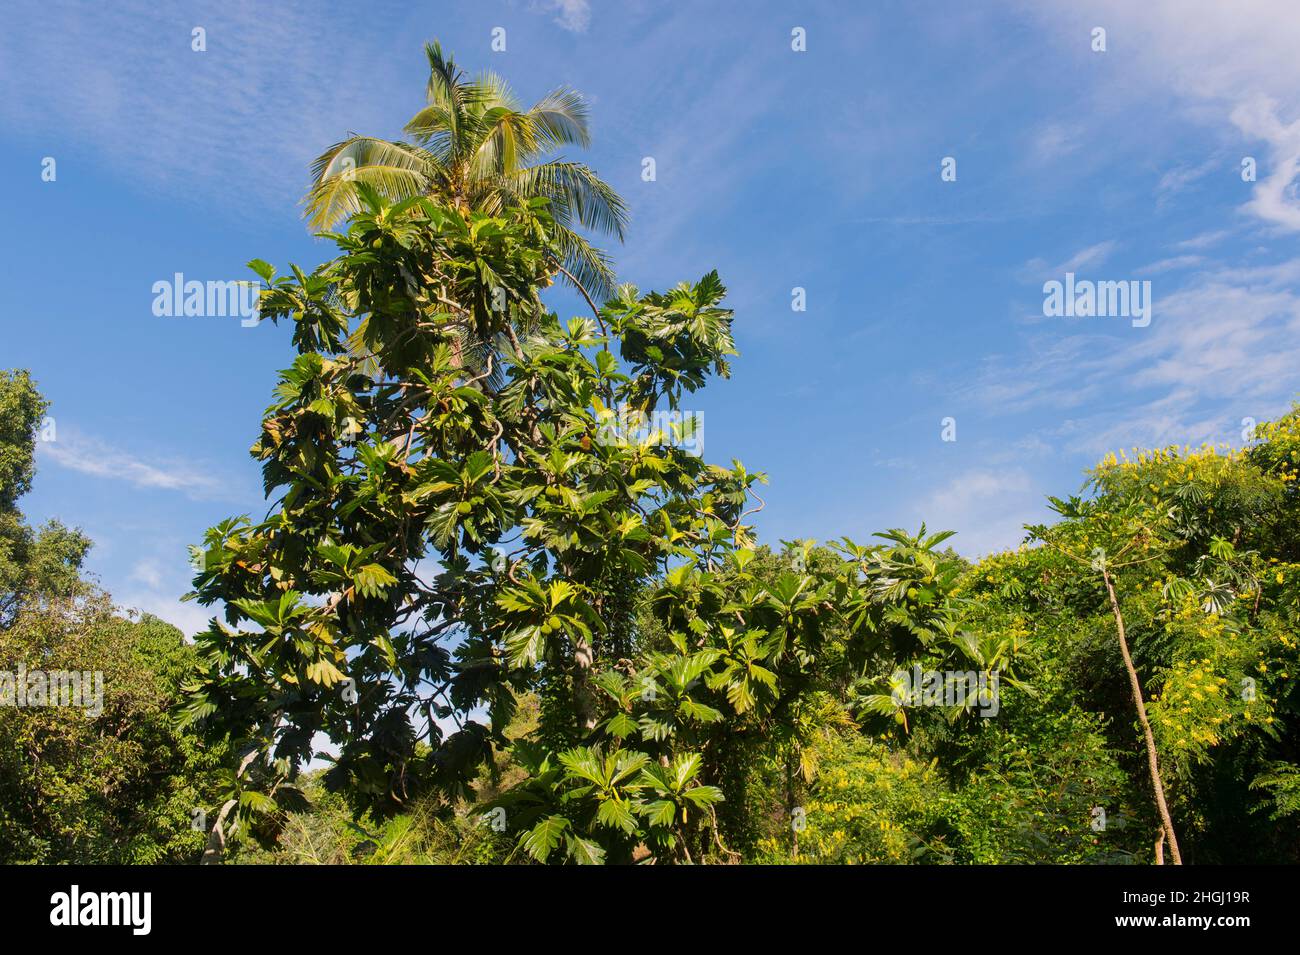 A Breadfruit tree (Artocarpus altilis), native to the Pacific islands along the Mokolea Point Trail, located near Kilauea, Kauai, Hawaii, USA. Stock Photo